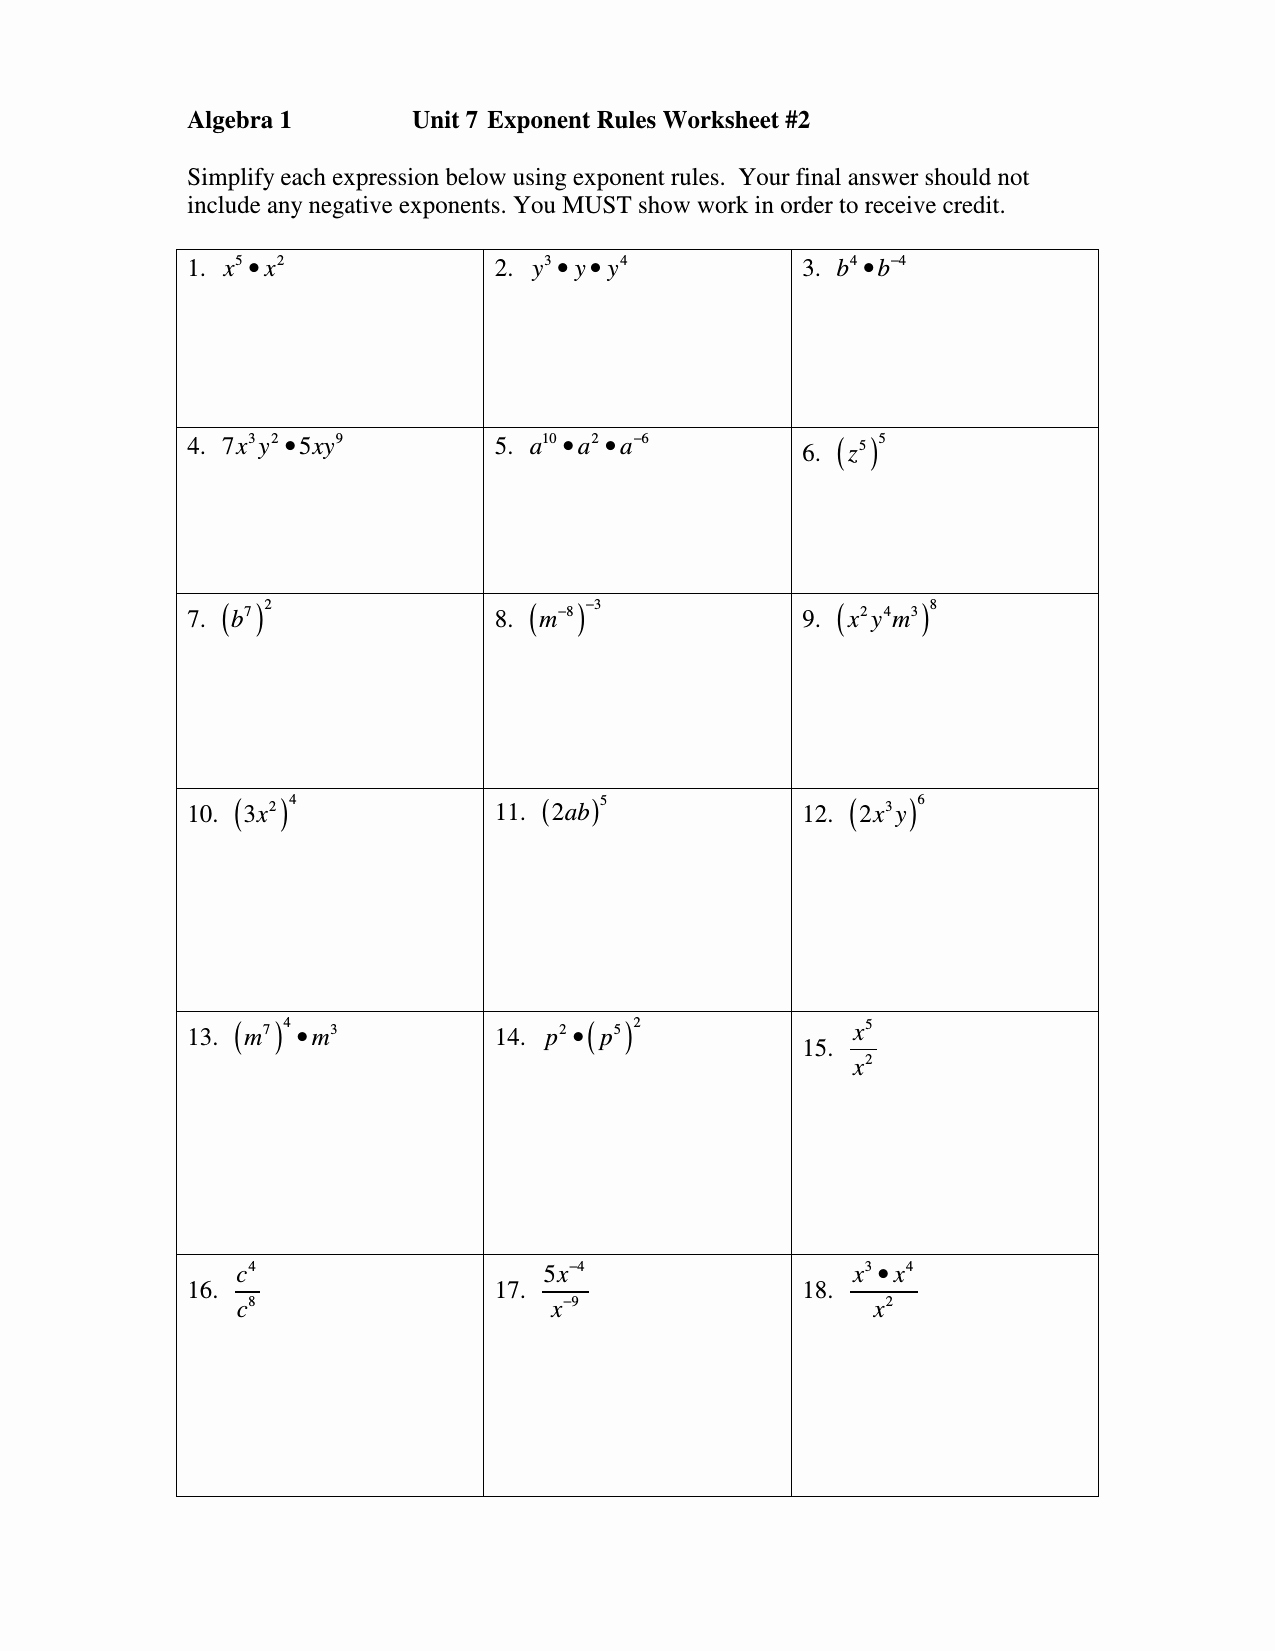 Algebra 2 Review Worksheet Awesome Algebra 1 Unit 7 Exponent Rules Worksheet 2 Simplify Each